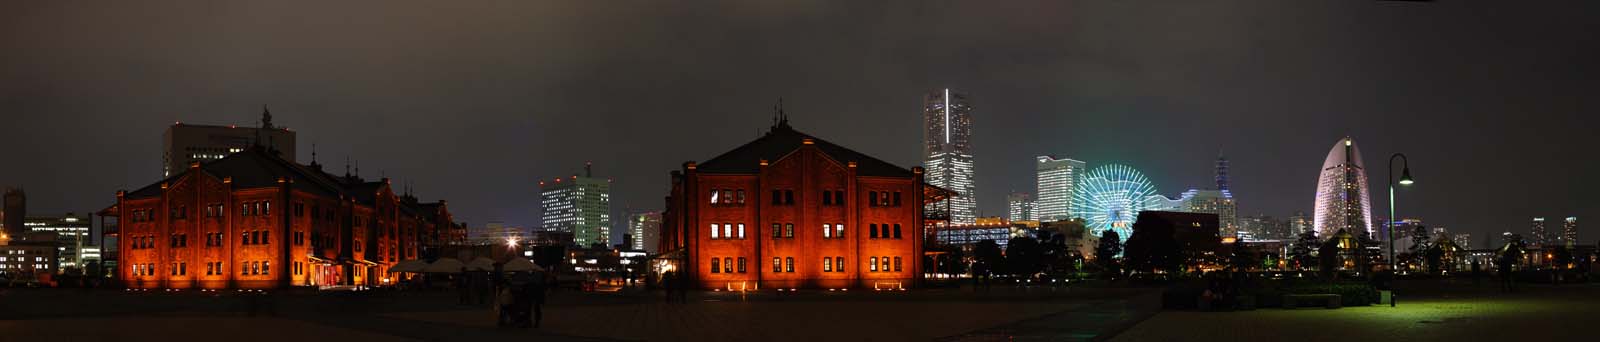 photo,material,free,landscape,picture,stock photo,Creative Commons,Yokohama red brick warehouse, brick warehouse, sightseeing spot, Waterfront, modernization industry inheritance